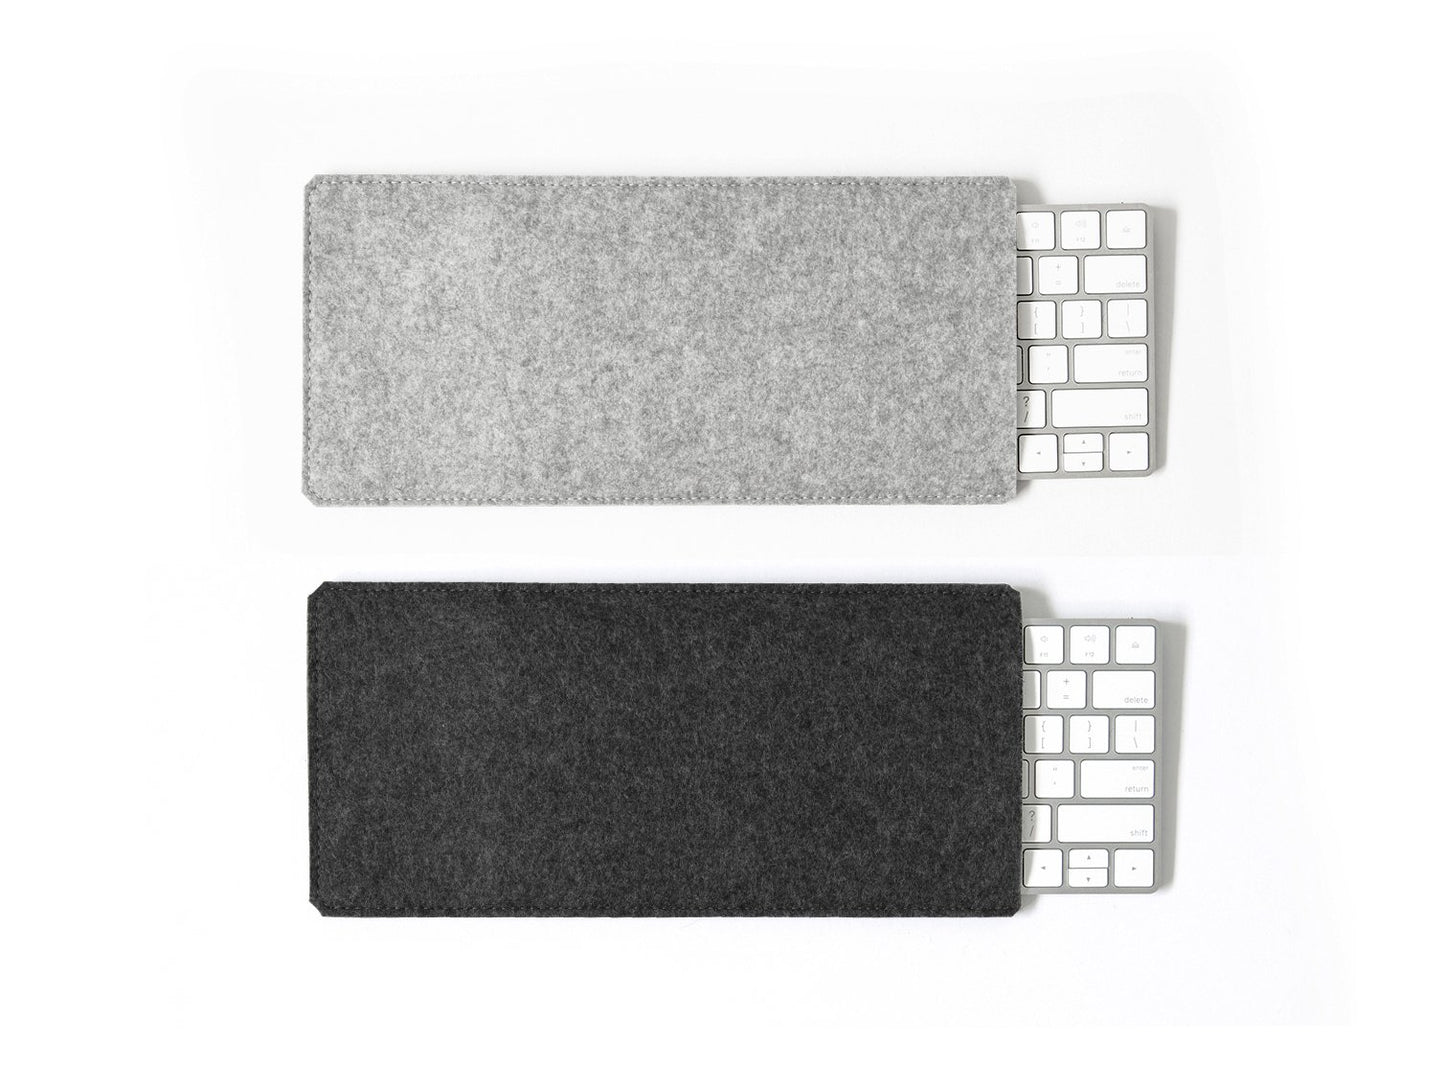 Magic Keyboard Simple Sleeve Gray / Black Felt